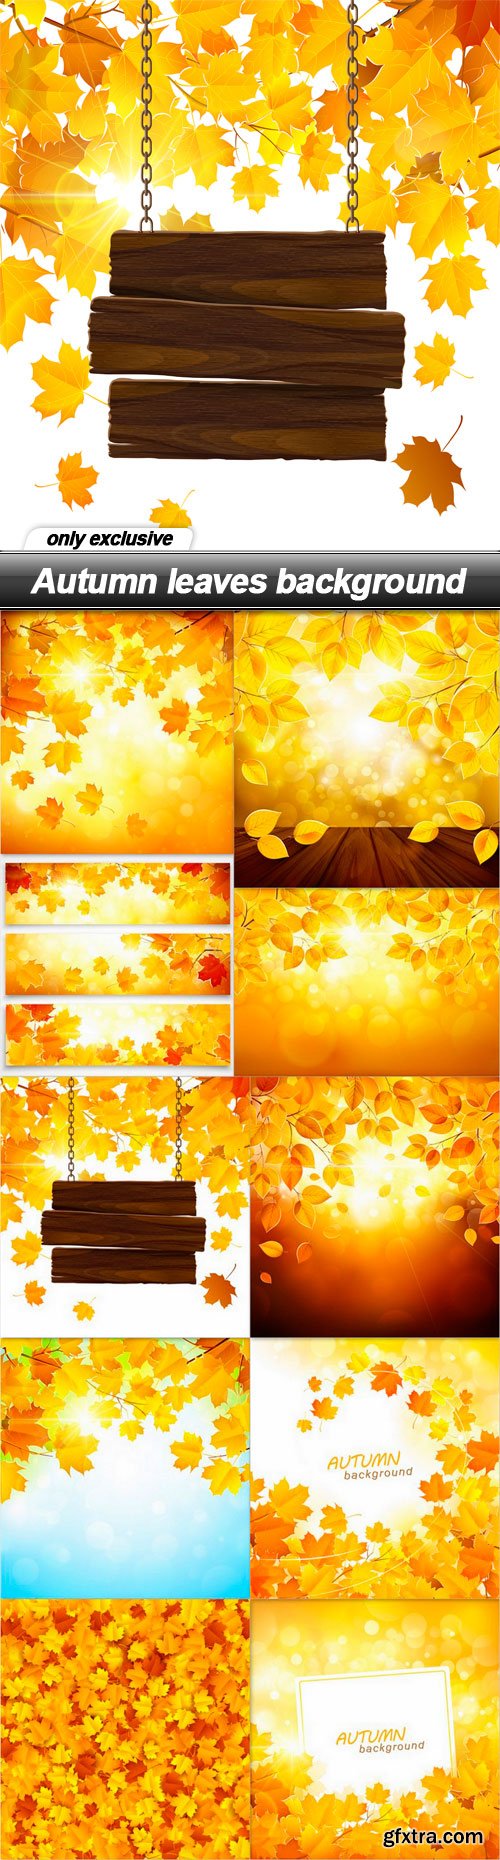 Autumn leaves background 2 - 10 EPS